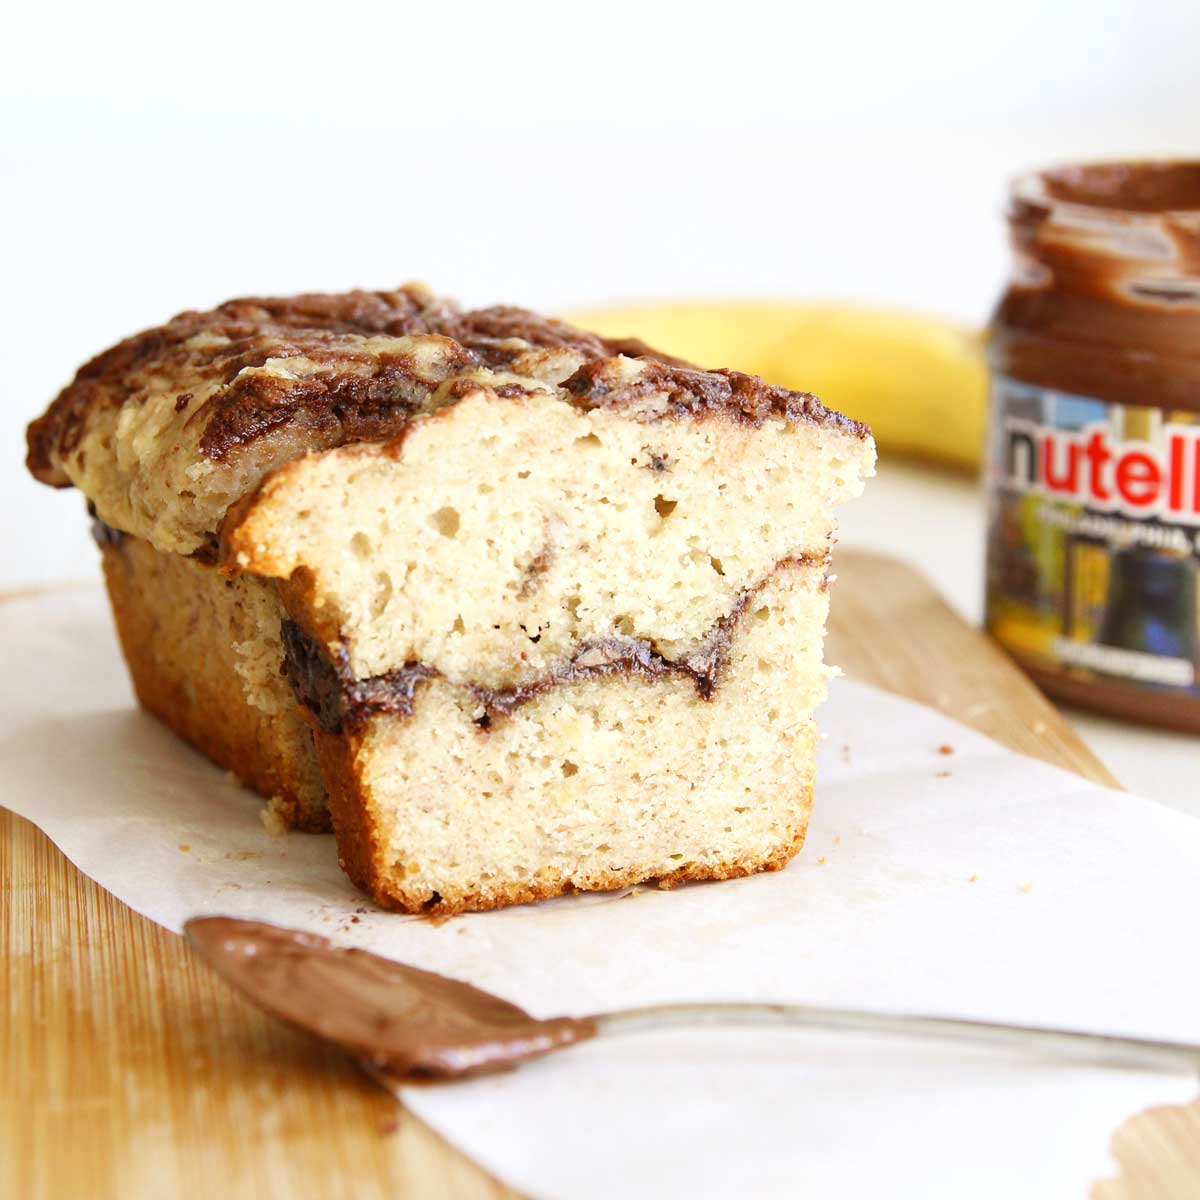 Super Moist Nutella Stuffed Banana Bread with Olive Oil & Almond Flour - Peanut Butter Banana Bread